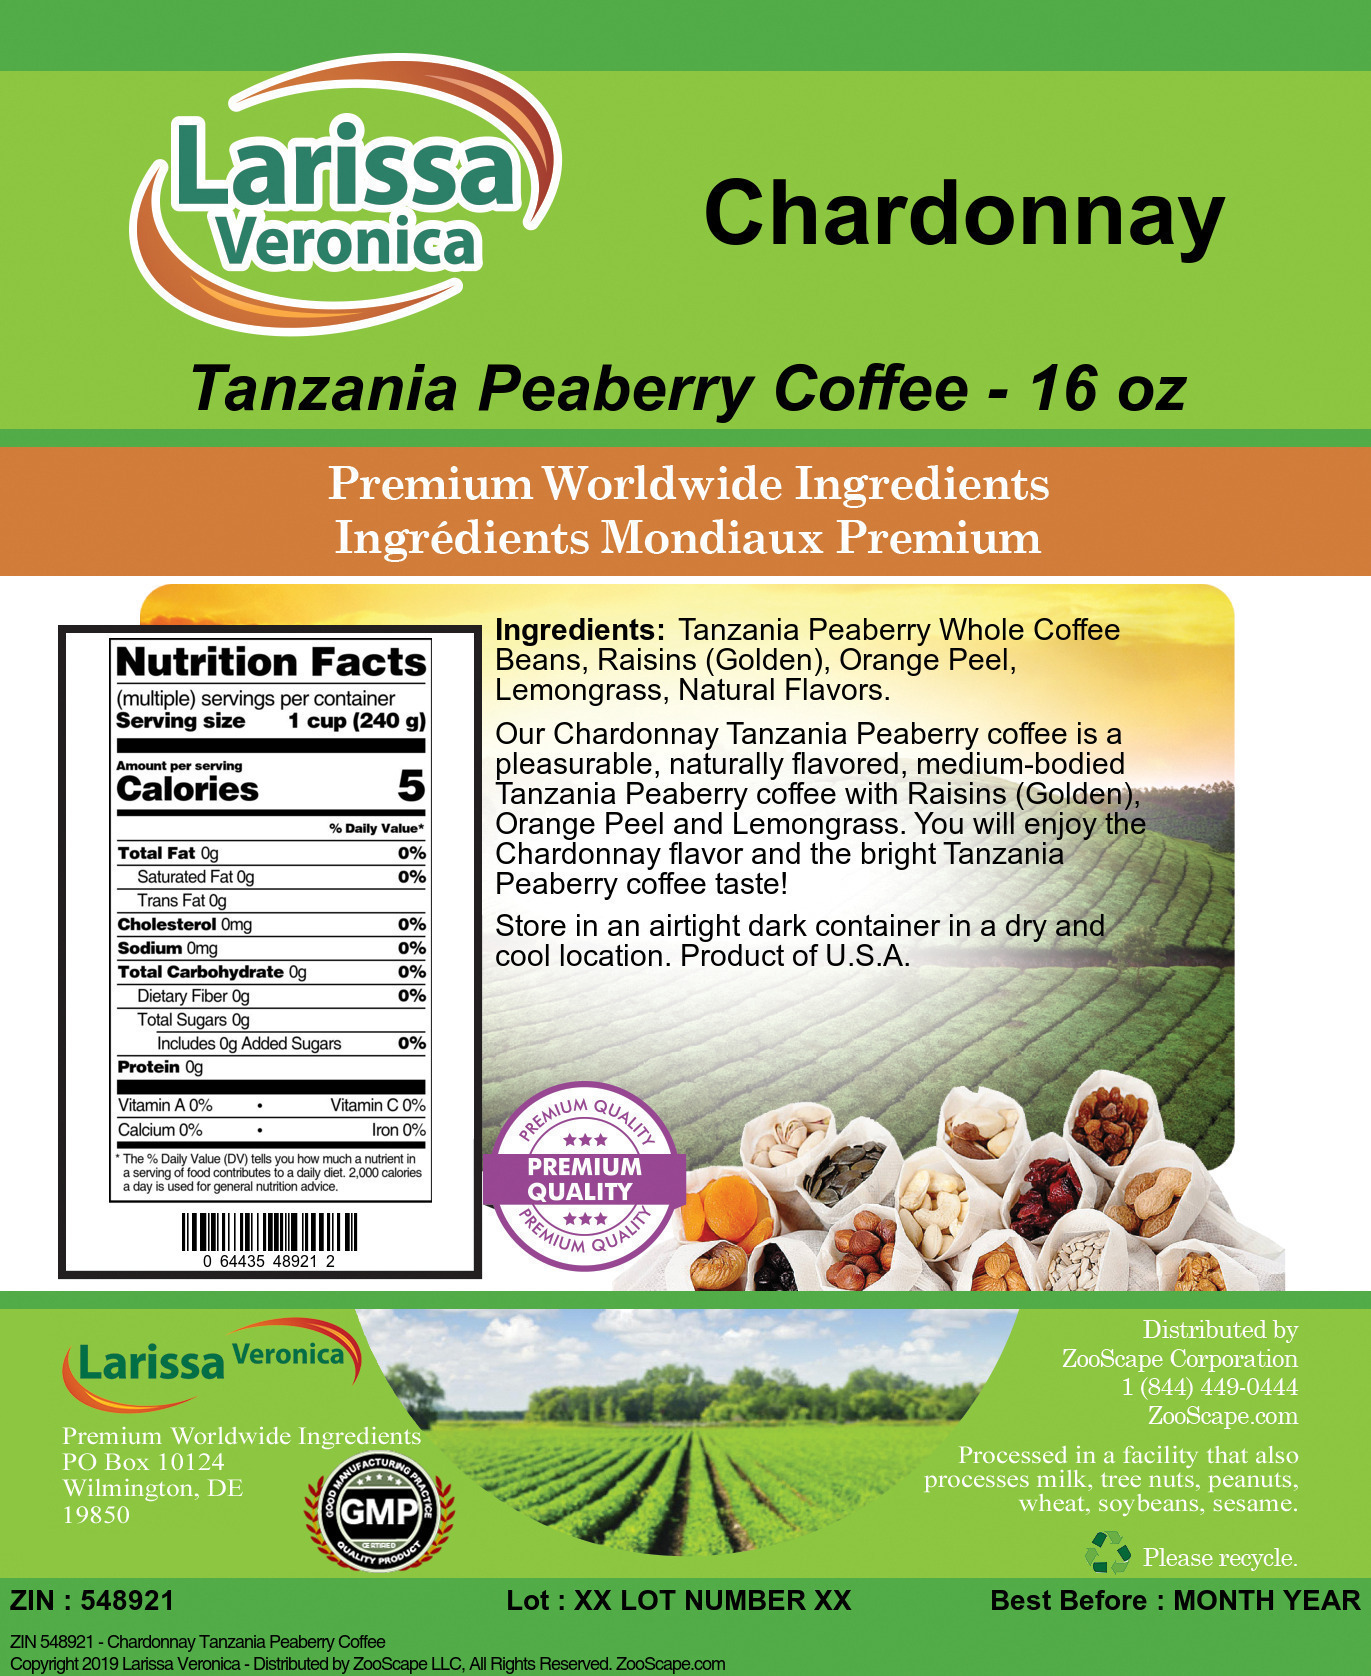 Chardonnay Tanzania Peaberry Coffee - Label